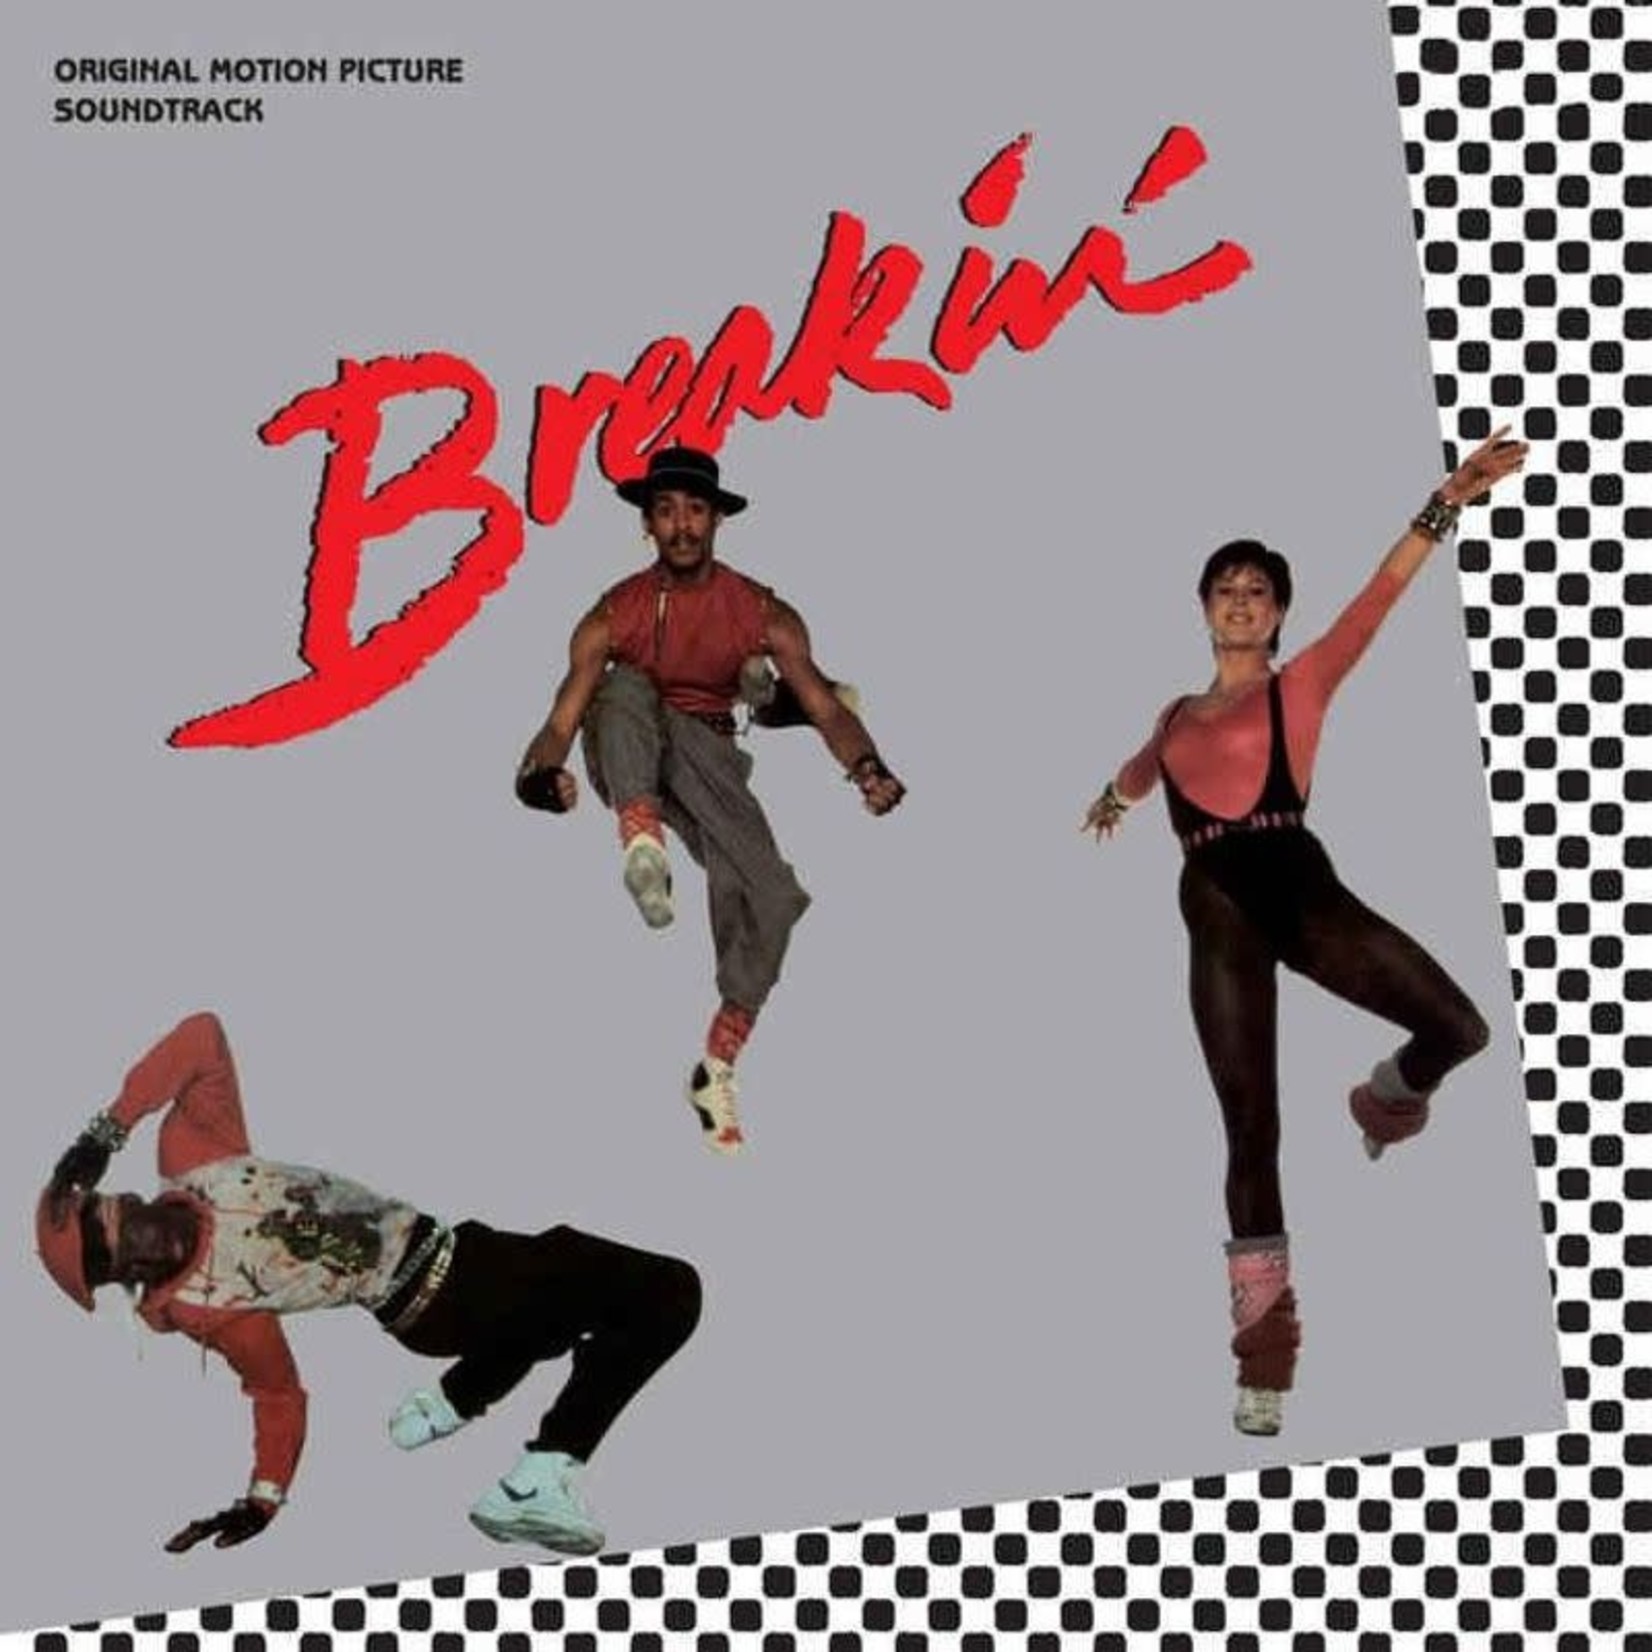 [Vintage] Various Artists - Breakin' (soundtrack)